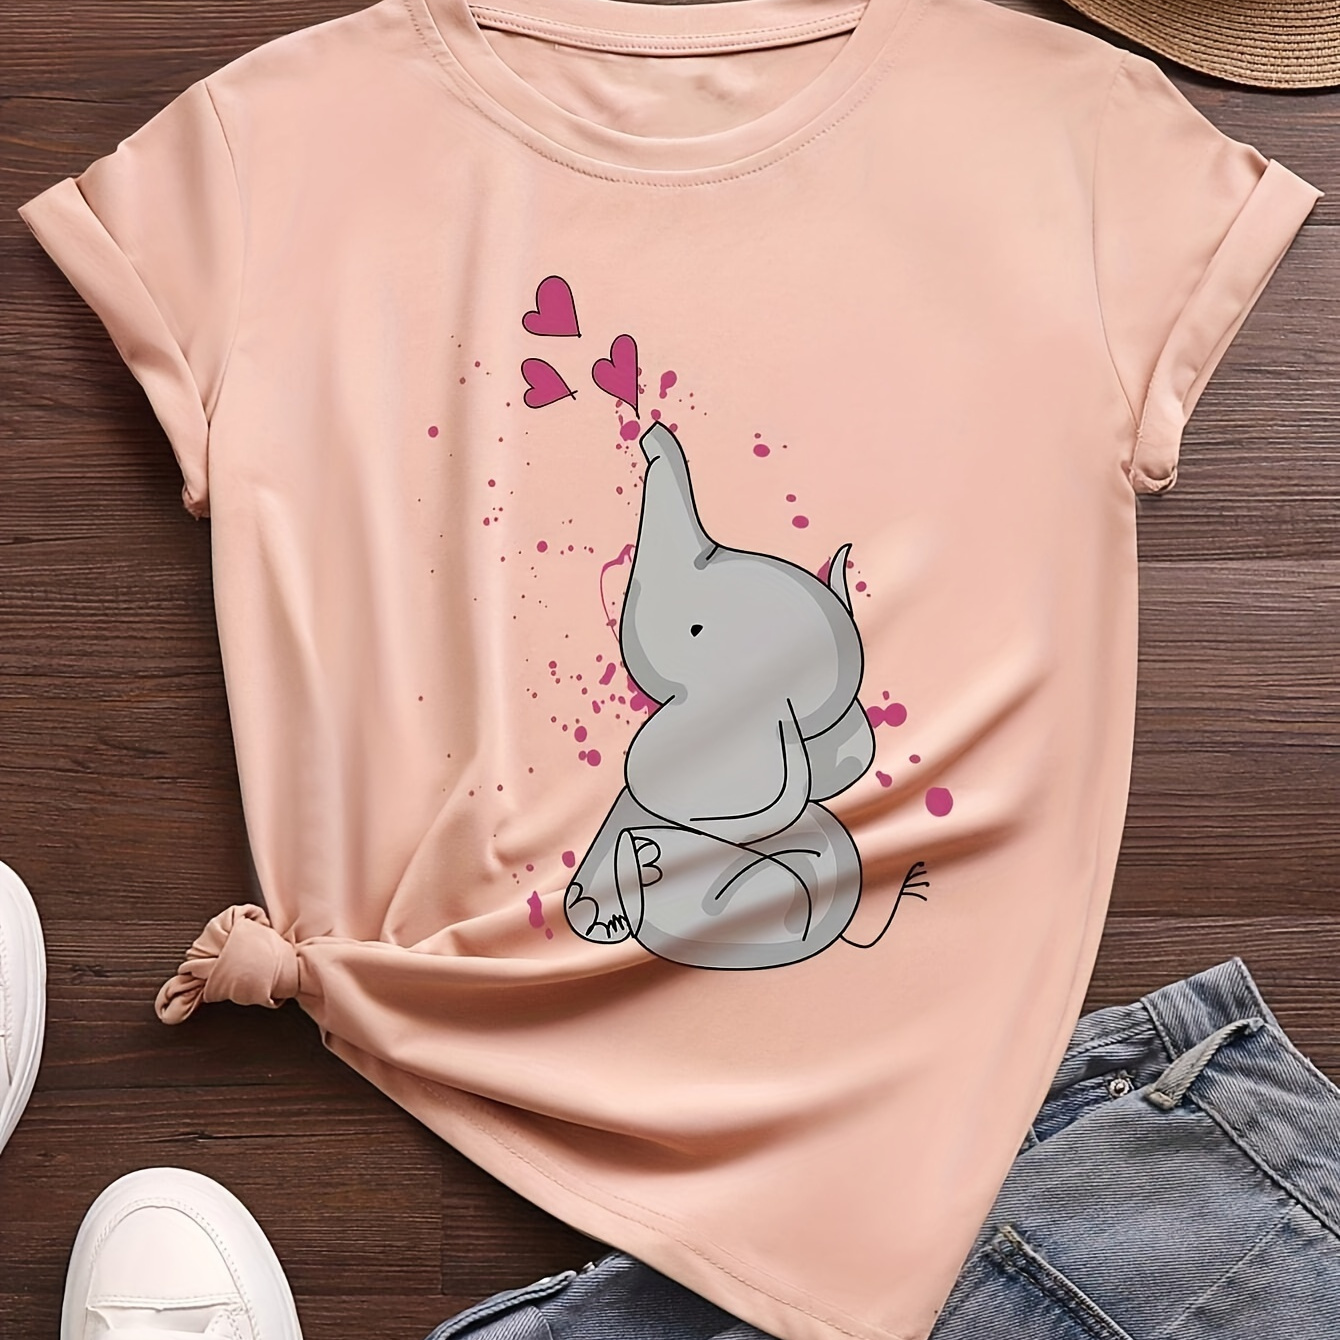 

Cute Elephant & Heart Print Casual T-shirt, Crew Neck Short Sleeve T-shirt For Spring & Summer, Women's Clothing